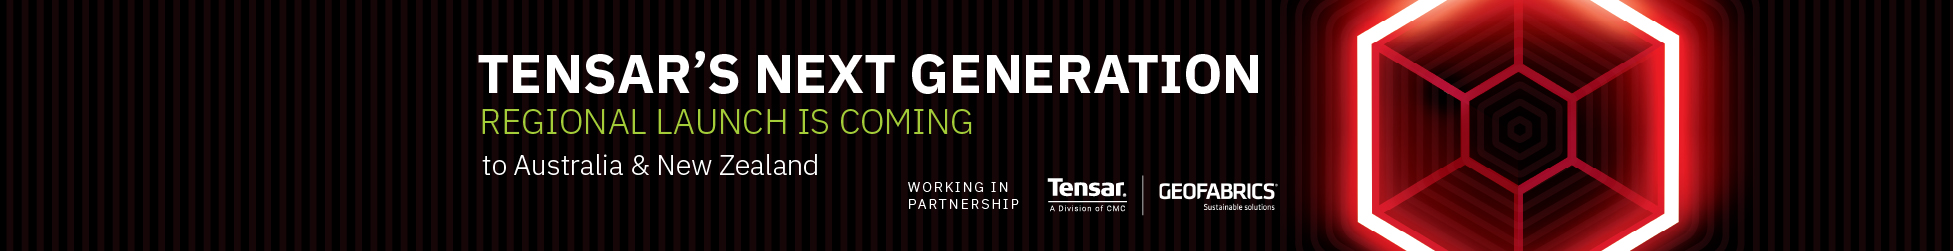 Image of Tensar's Next Generation - Australia & New Zealand Regional Launch